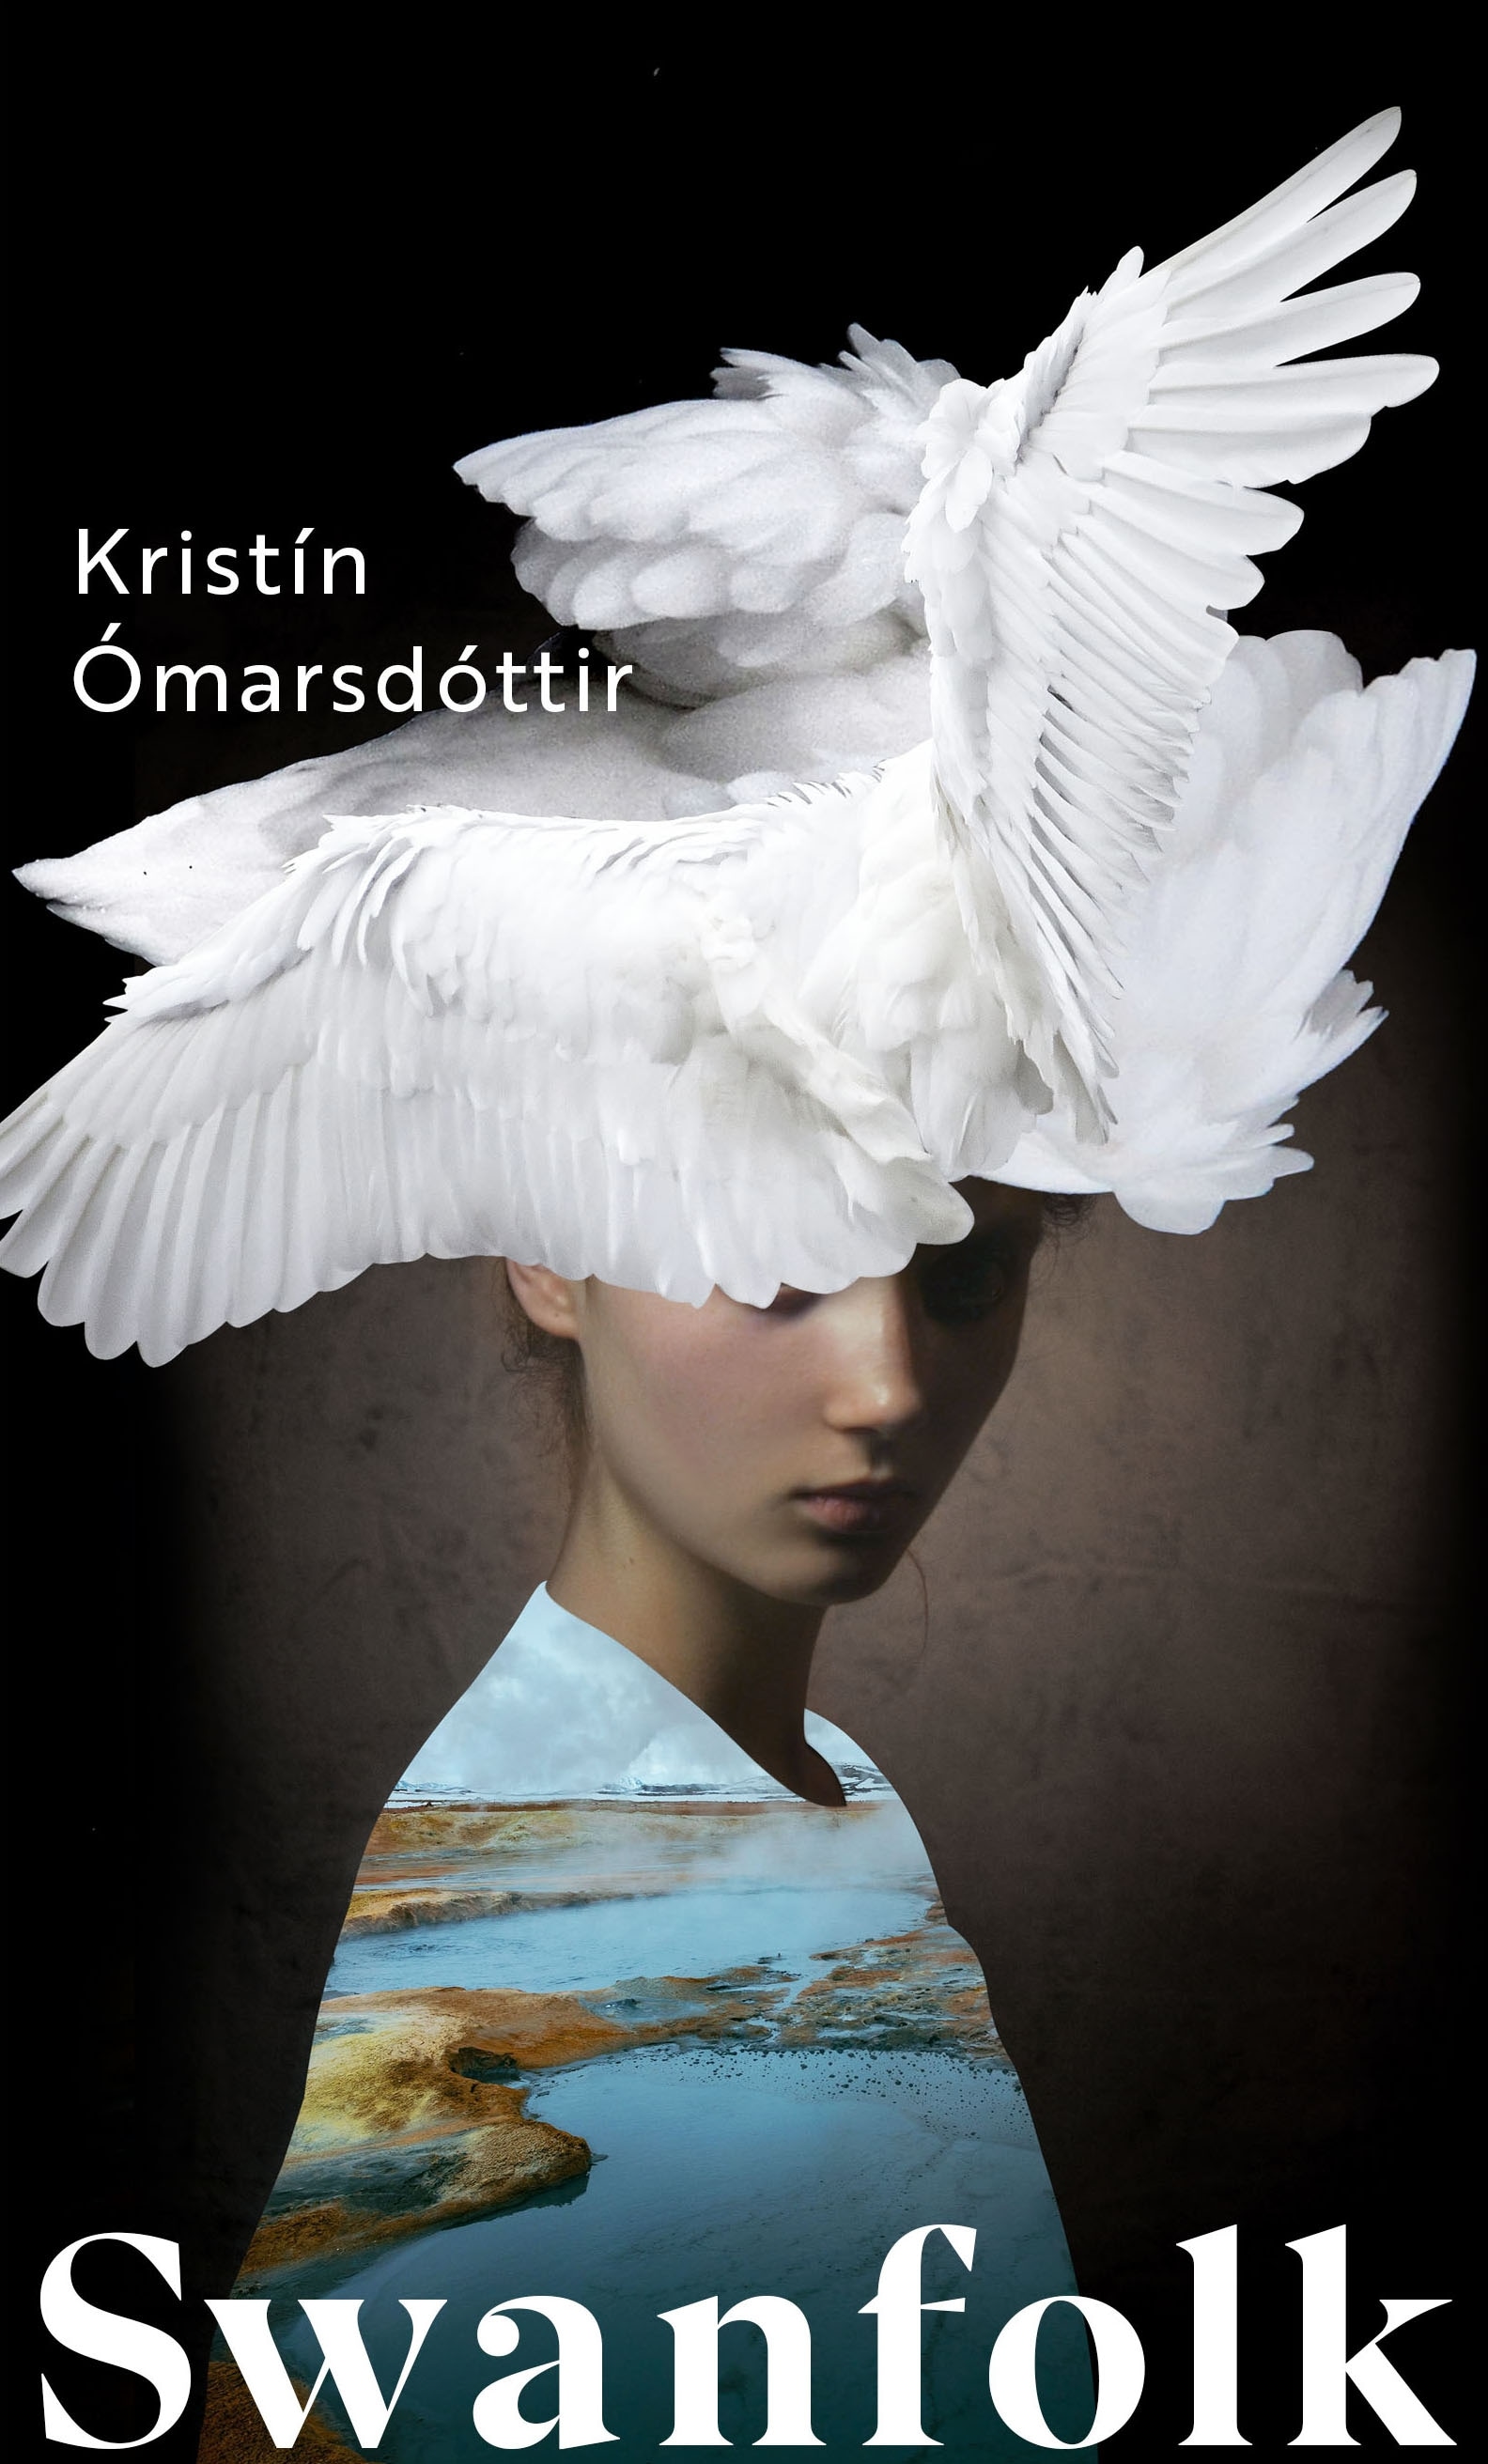 Book “Swanfolk” by Kristin Ómarsdóttir — July 7, 2022